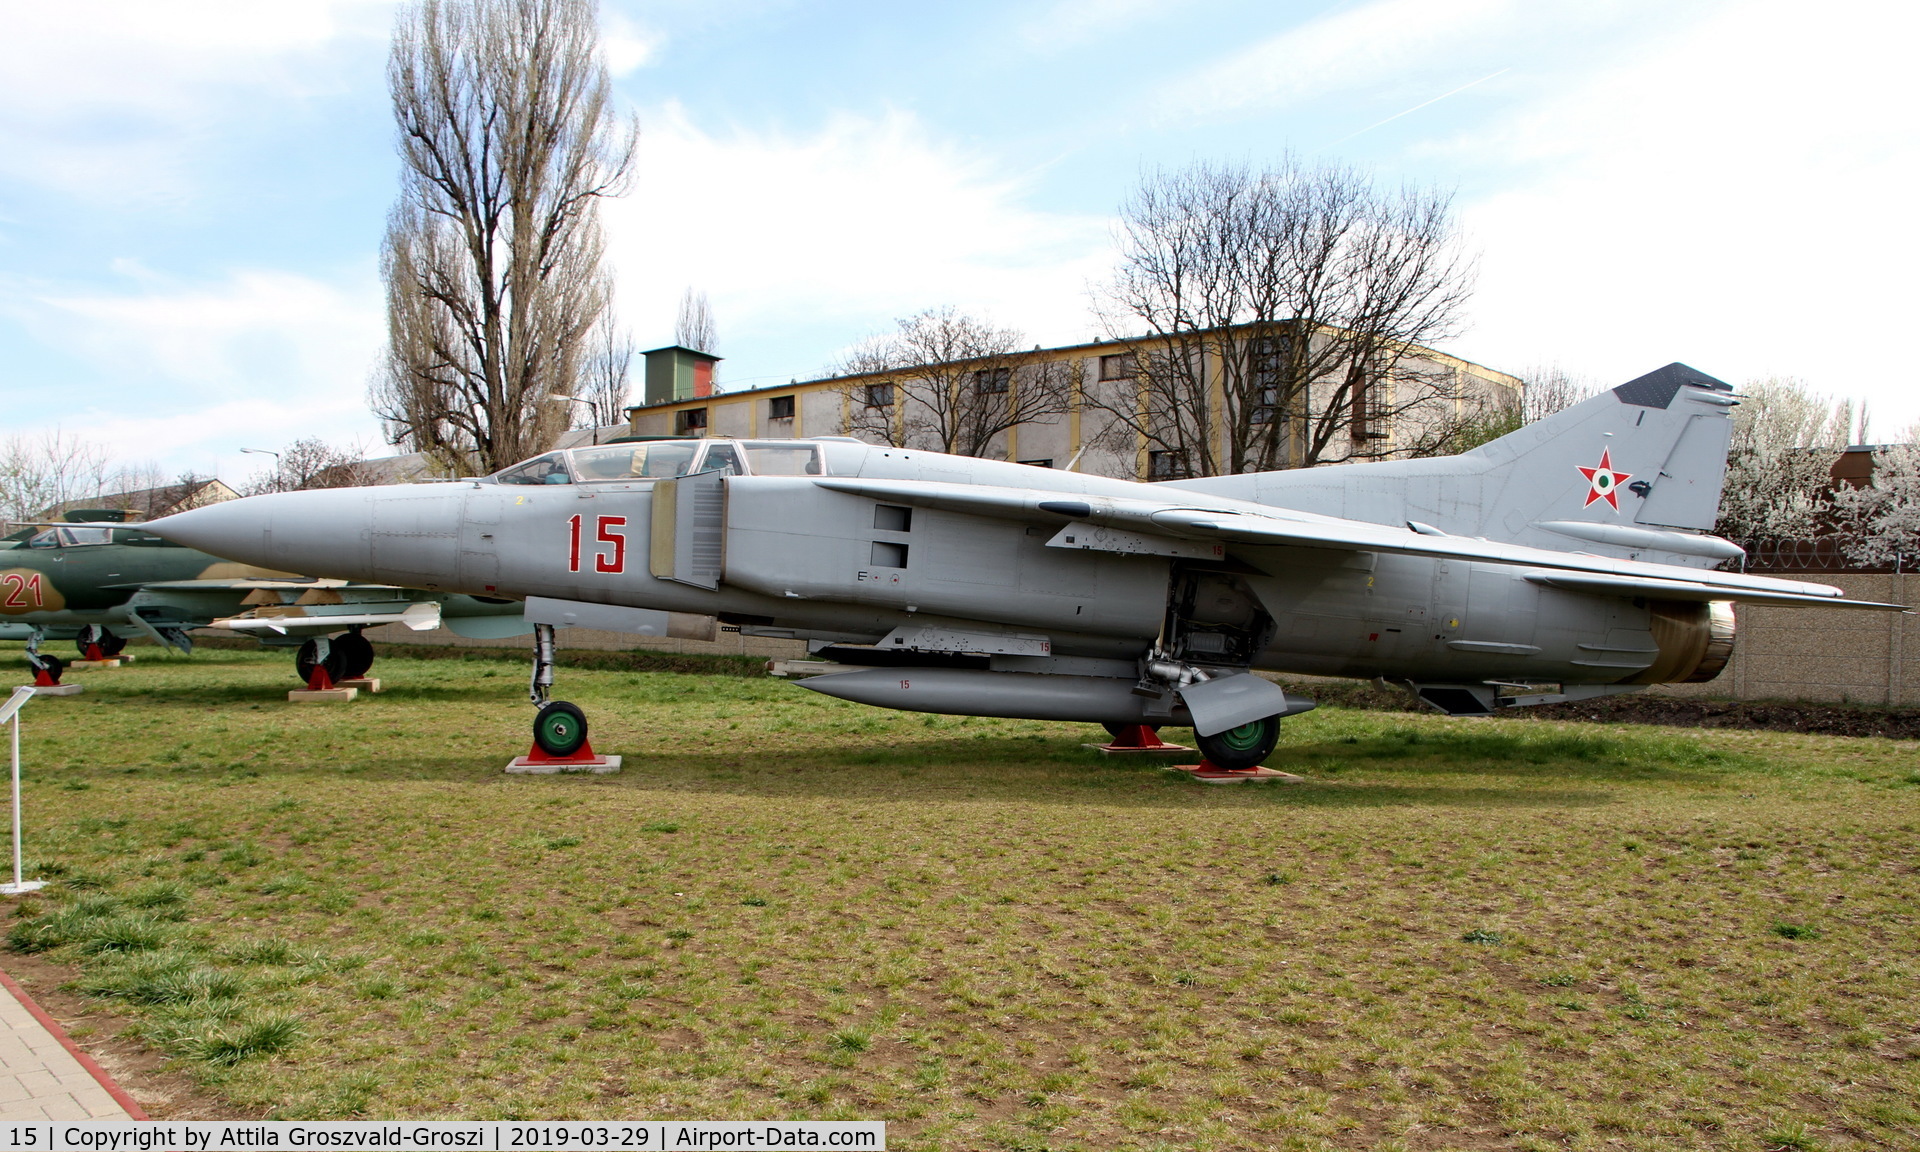 15, 1979 Mikoyan-Gurevich MiG-23UB C/N A1037926, RepTár. Szolnok aviation history museum, Hungary